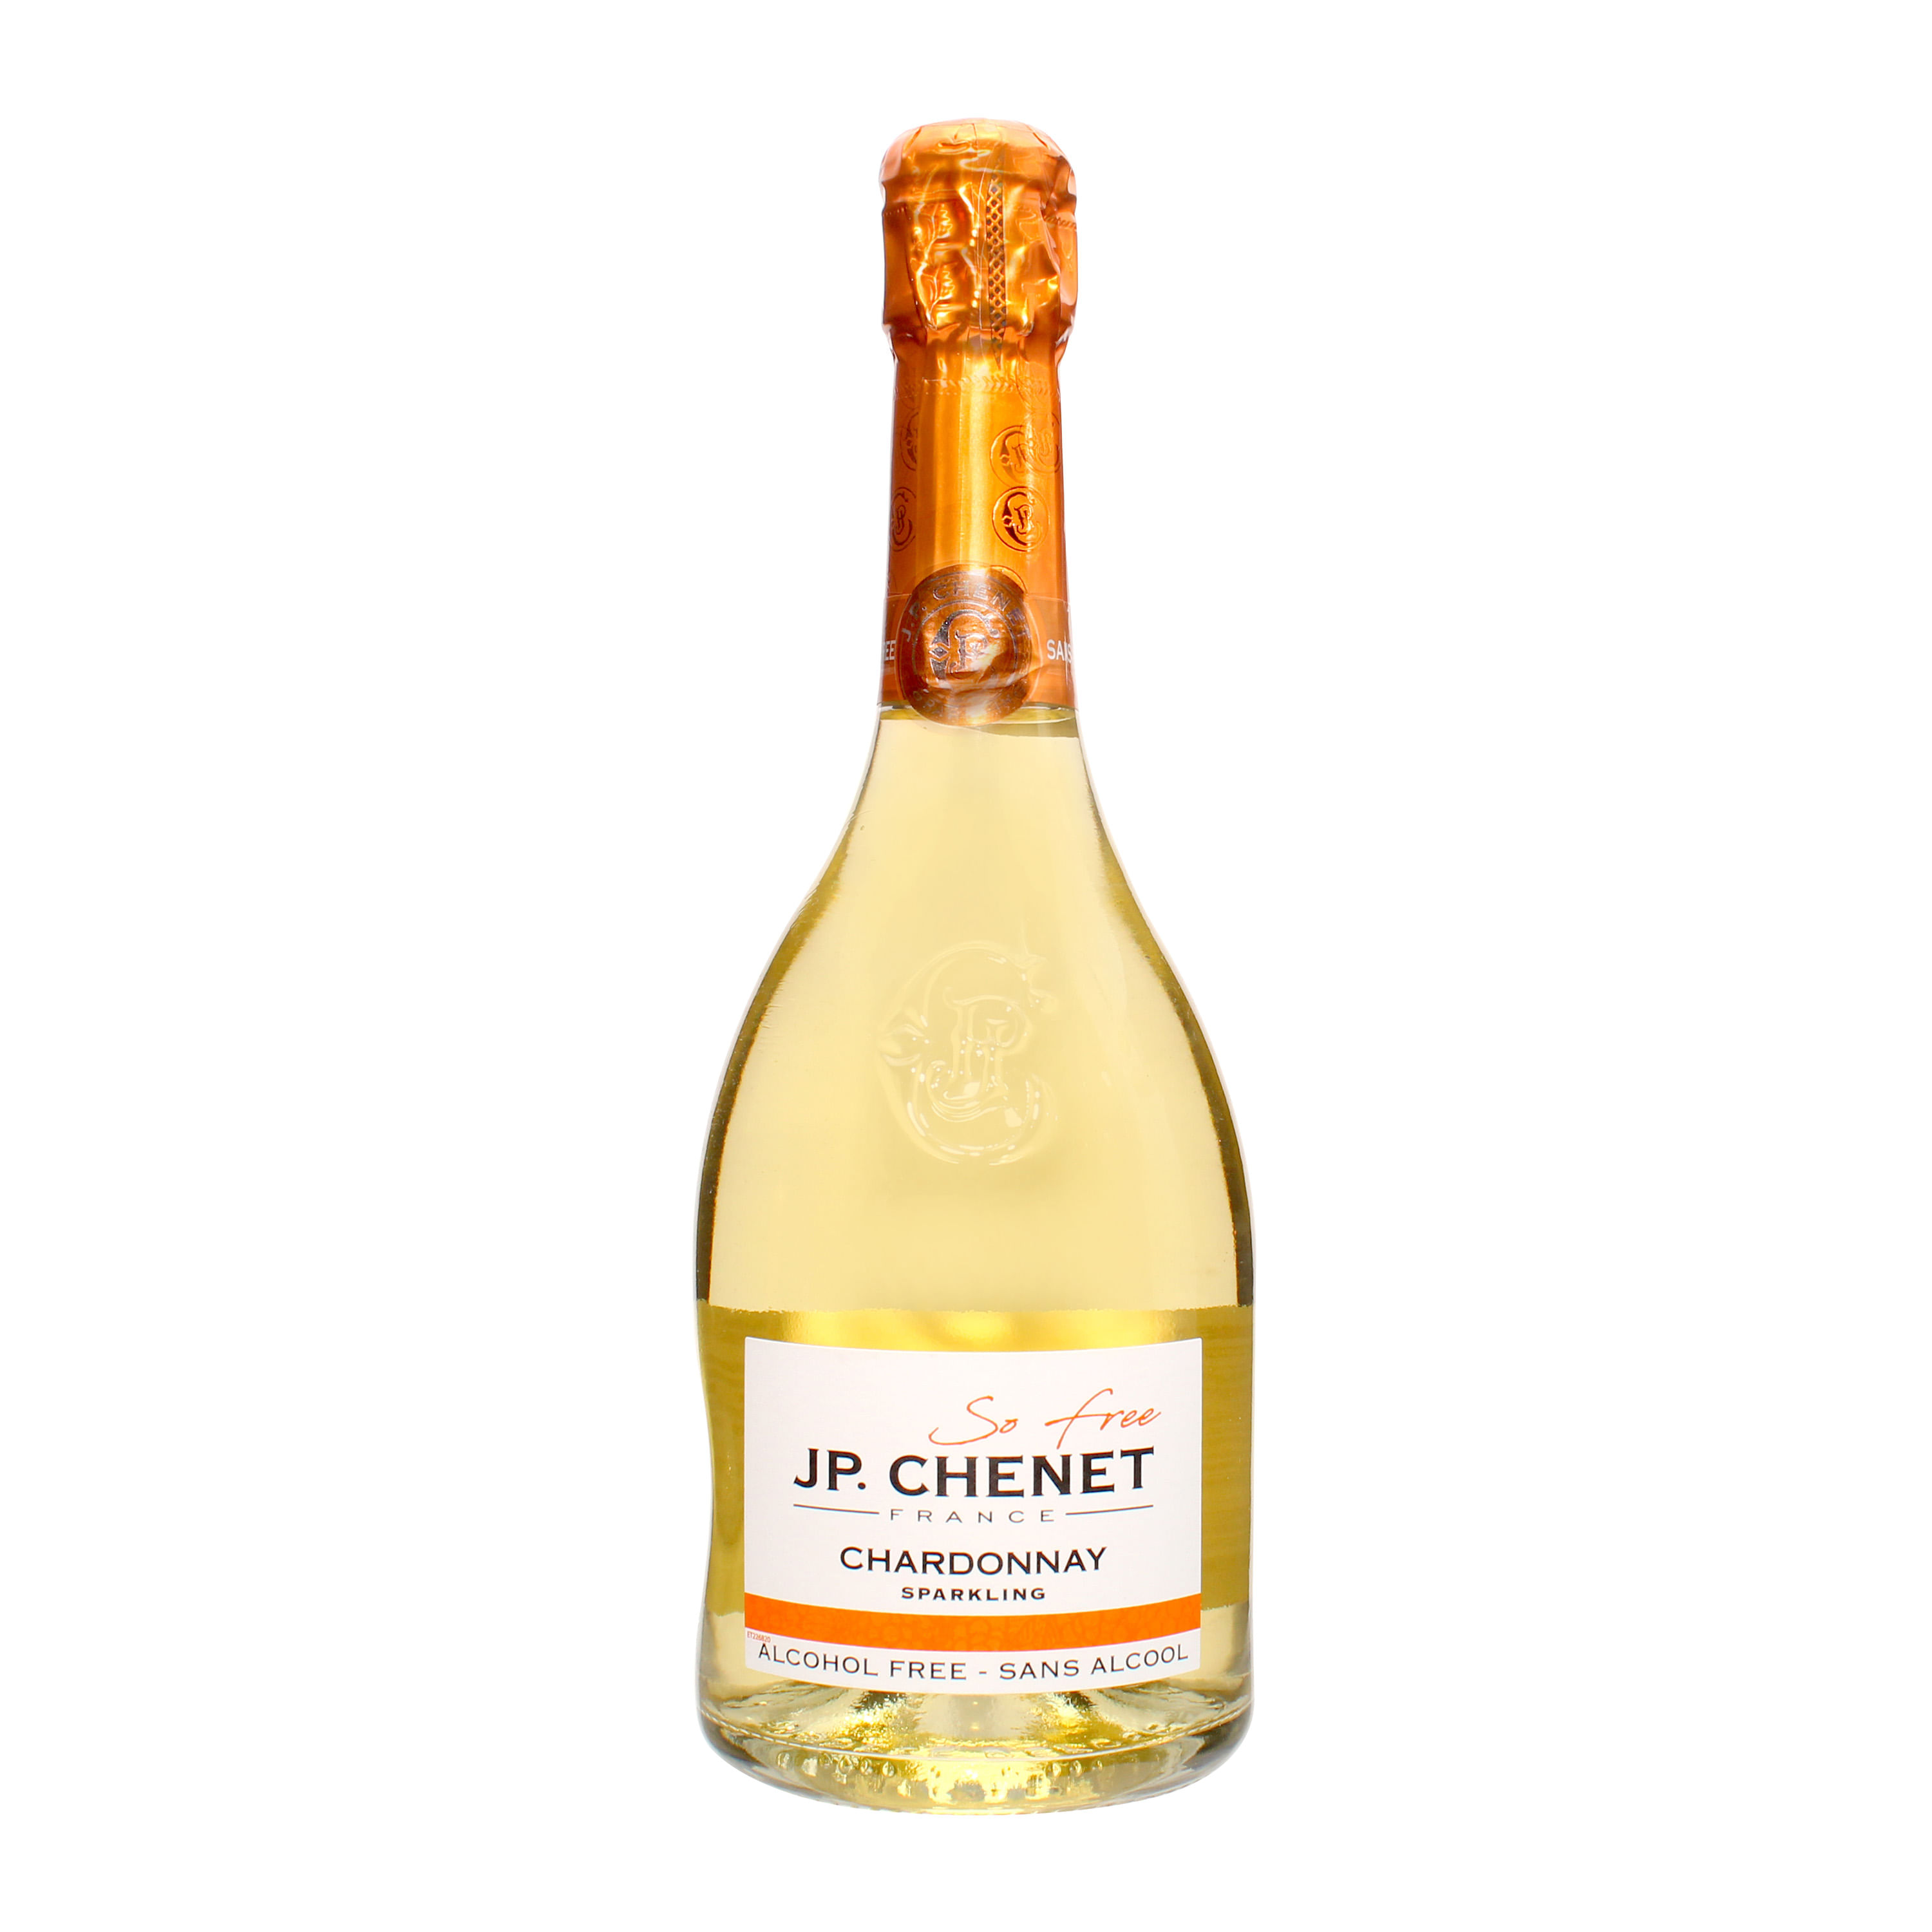 Vino-Jp-Chenet-Sparkling-Chard-Alcohol-Free-750-ml-1-36742